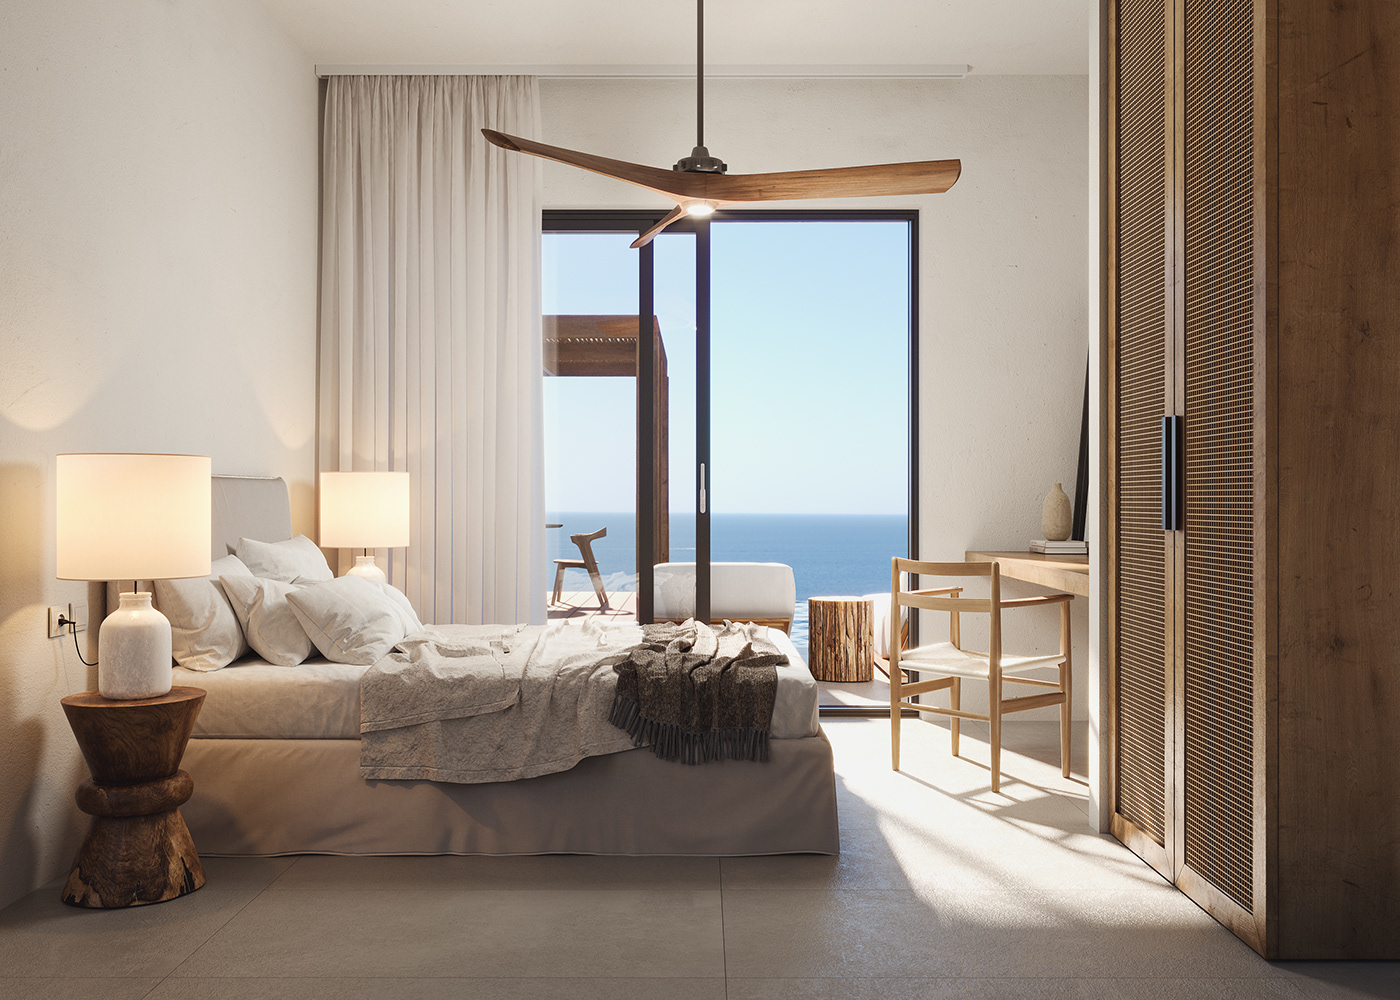 3ds max architecture corona render  Greece Interior interior design  Render Villa visualisation